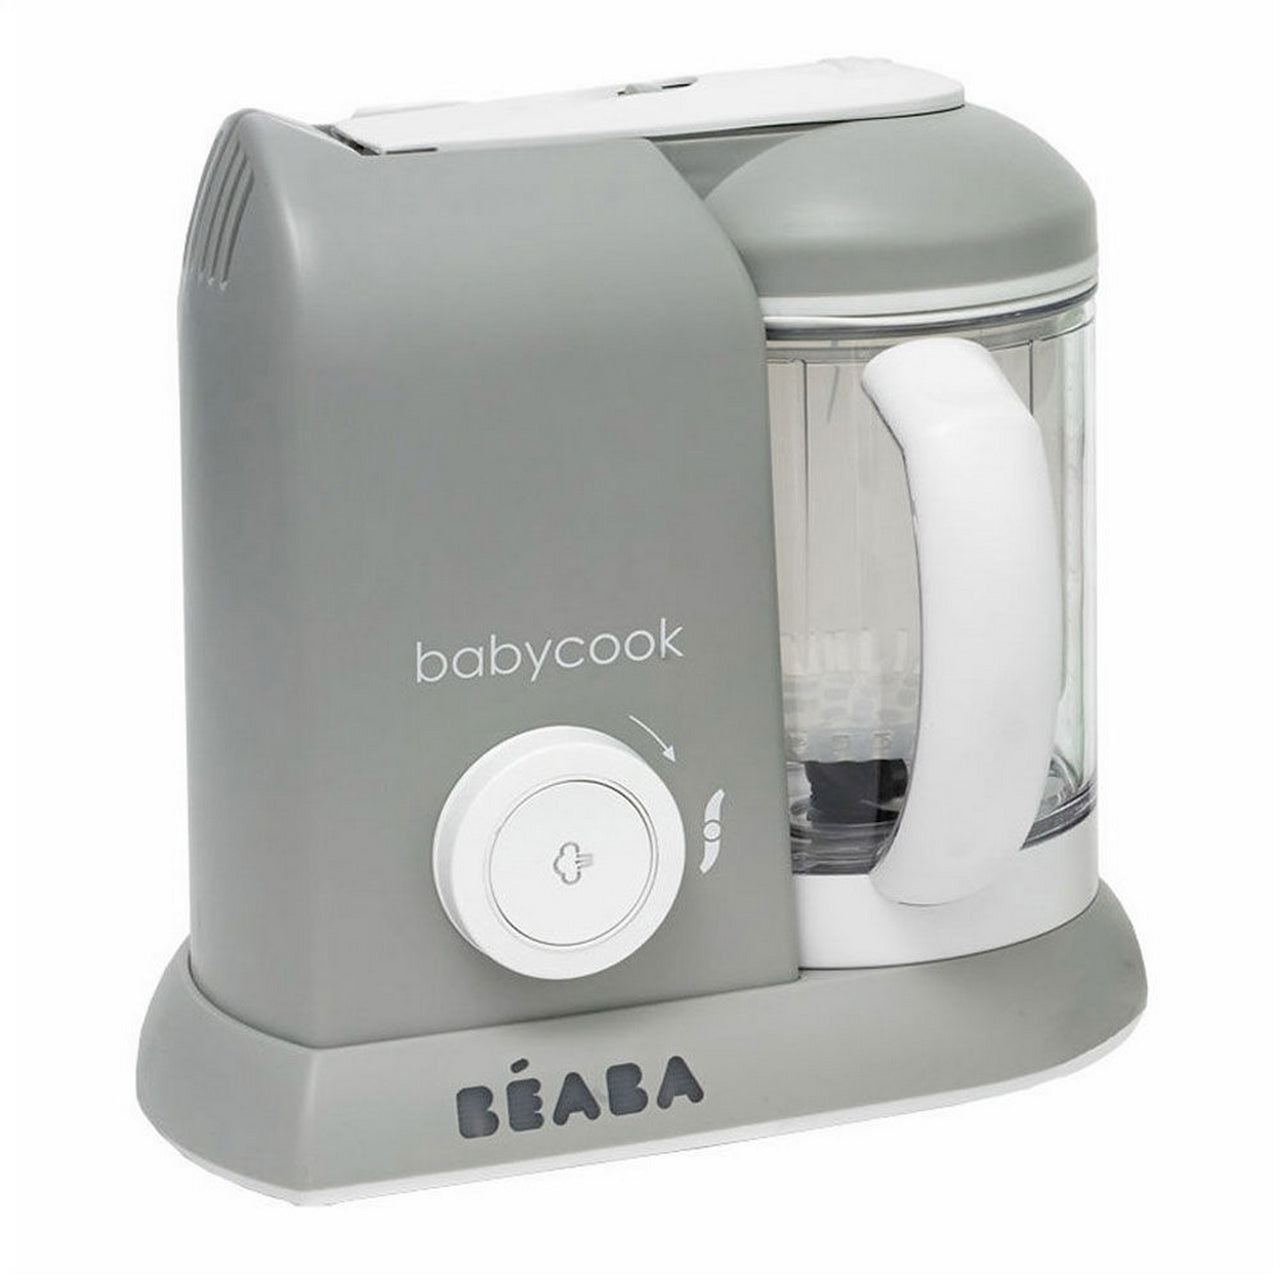 Beaba - Babycook Pro Food Processor